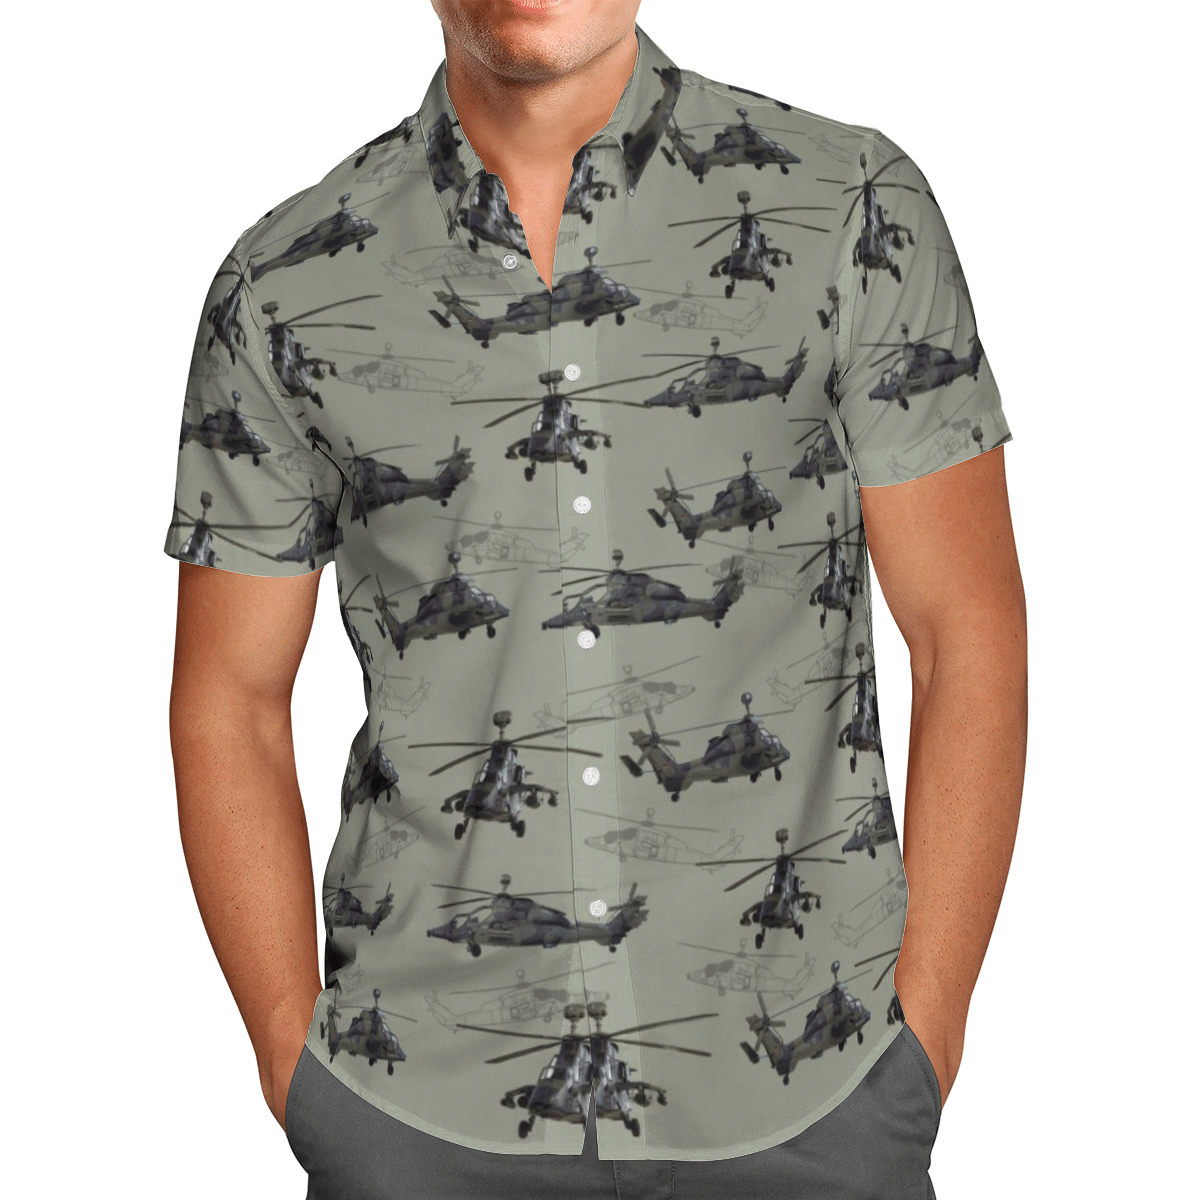 Enjoy your summer with top cool hawaiian shirt below 20